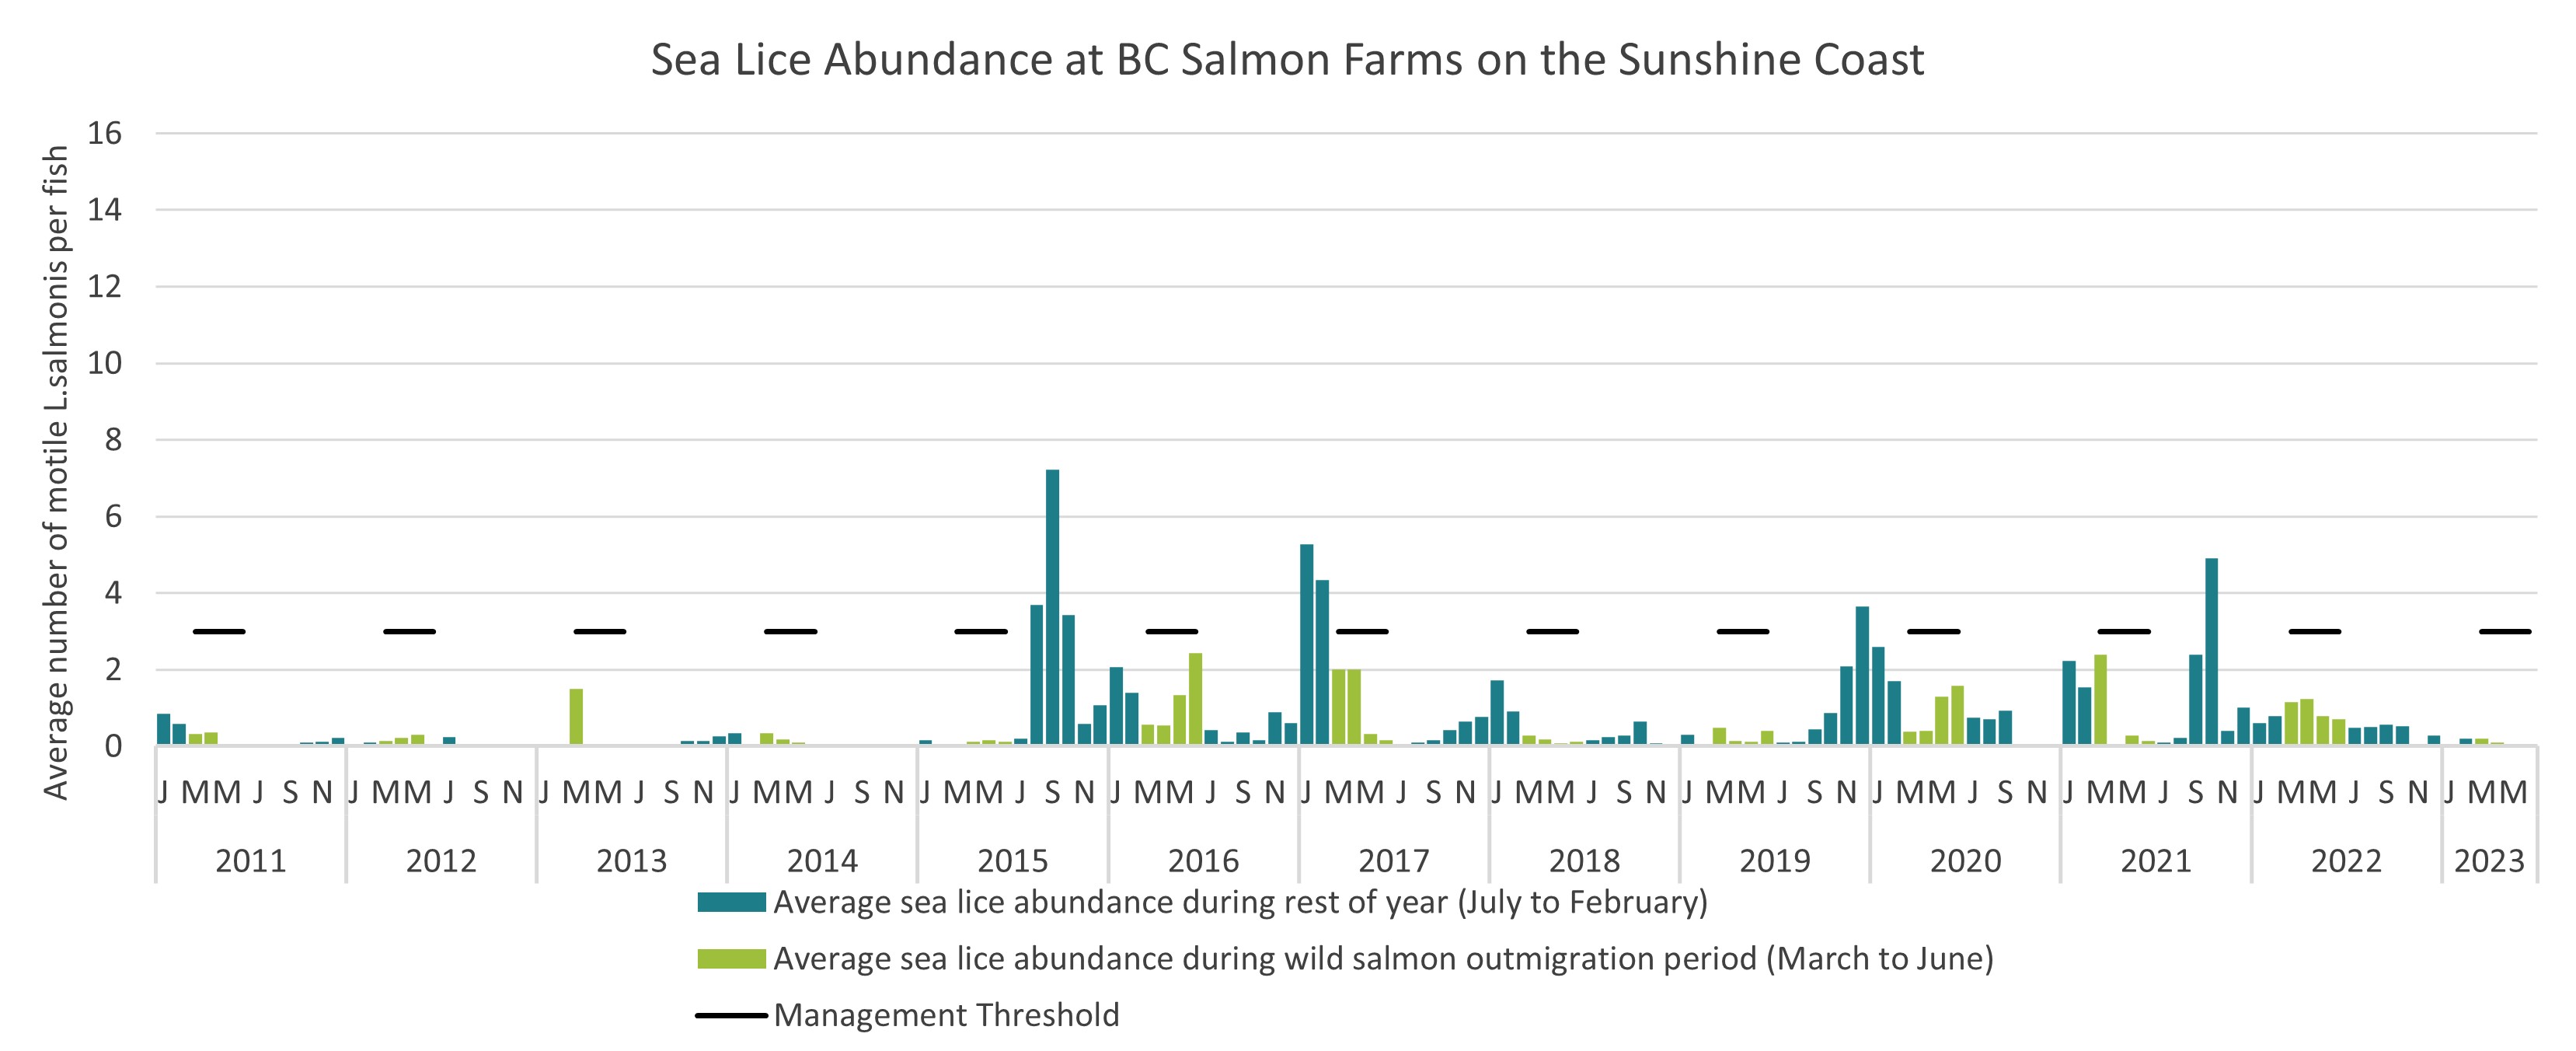 Sea Lice Abundance at BC Salmon Farms on the Sunshine Coast, 2011 to 2022